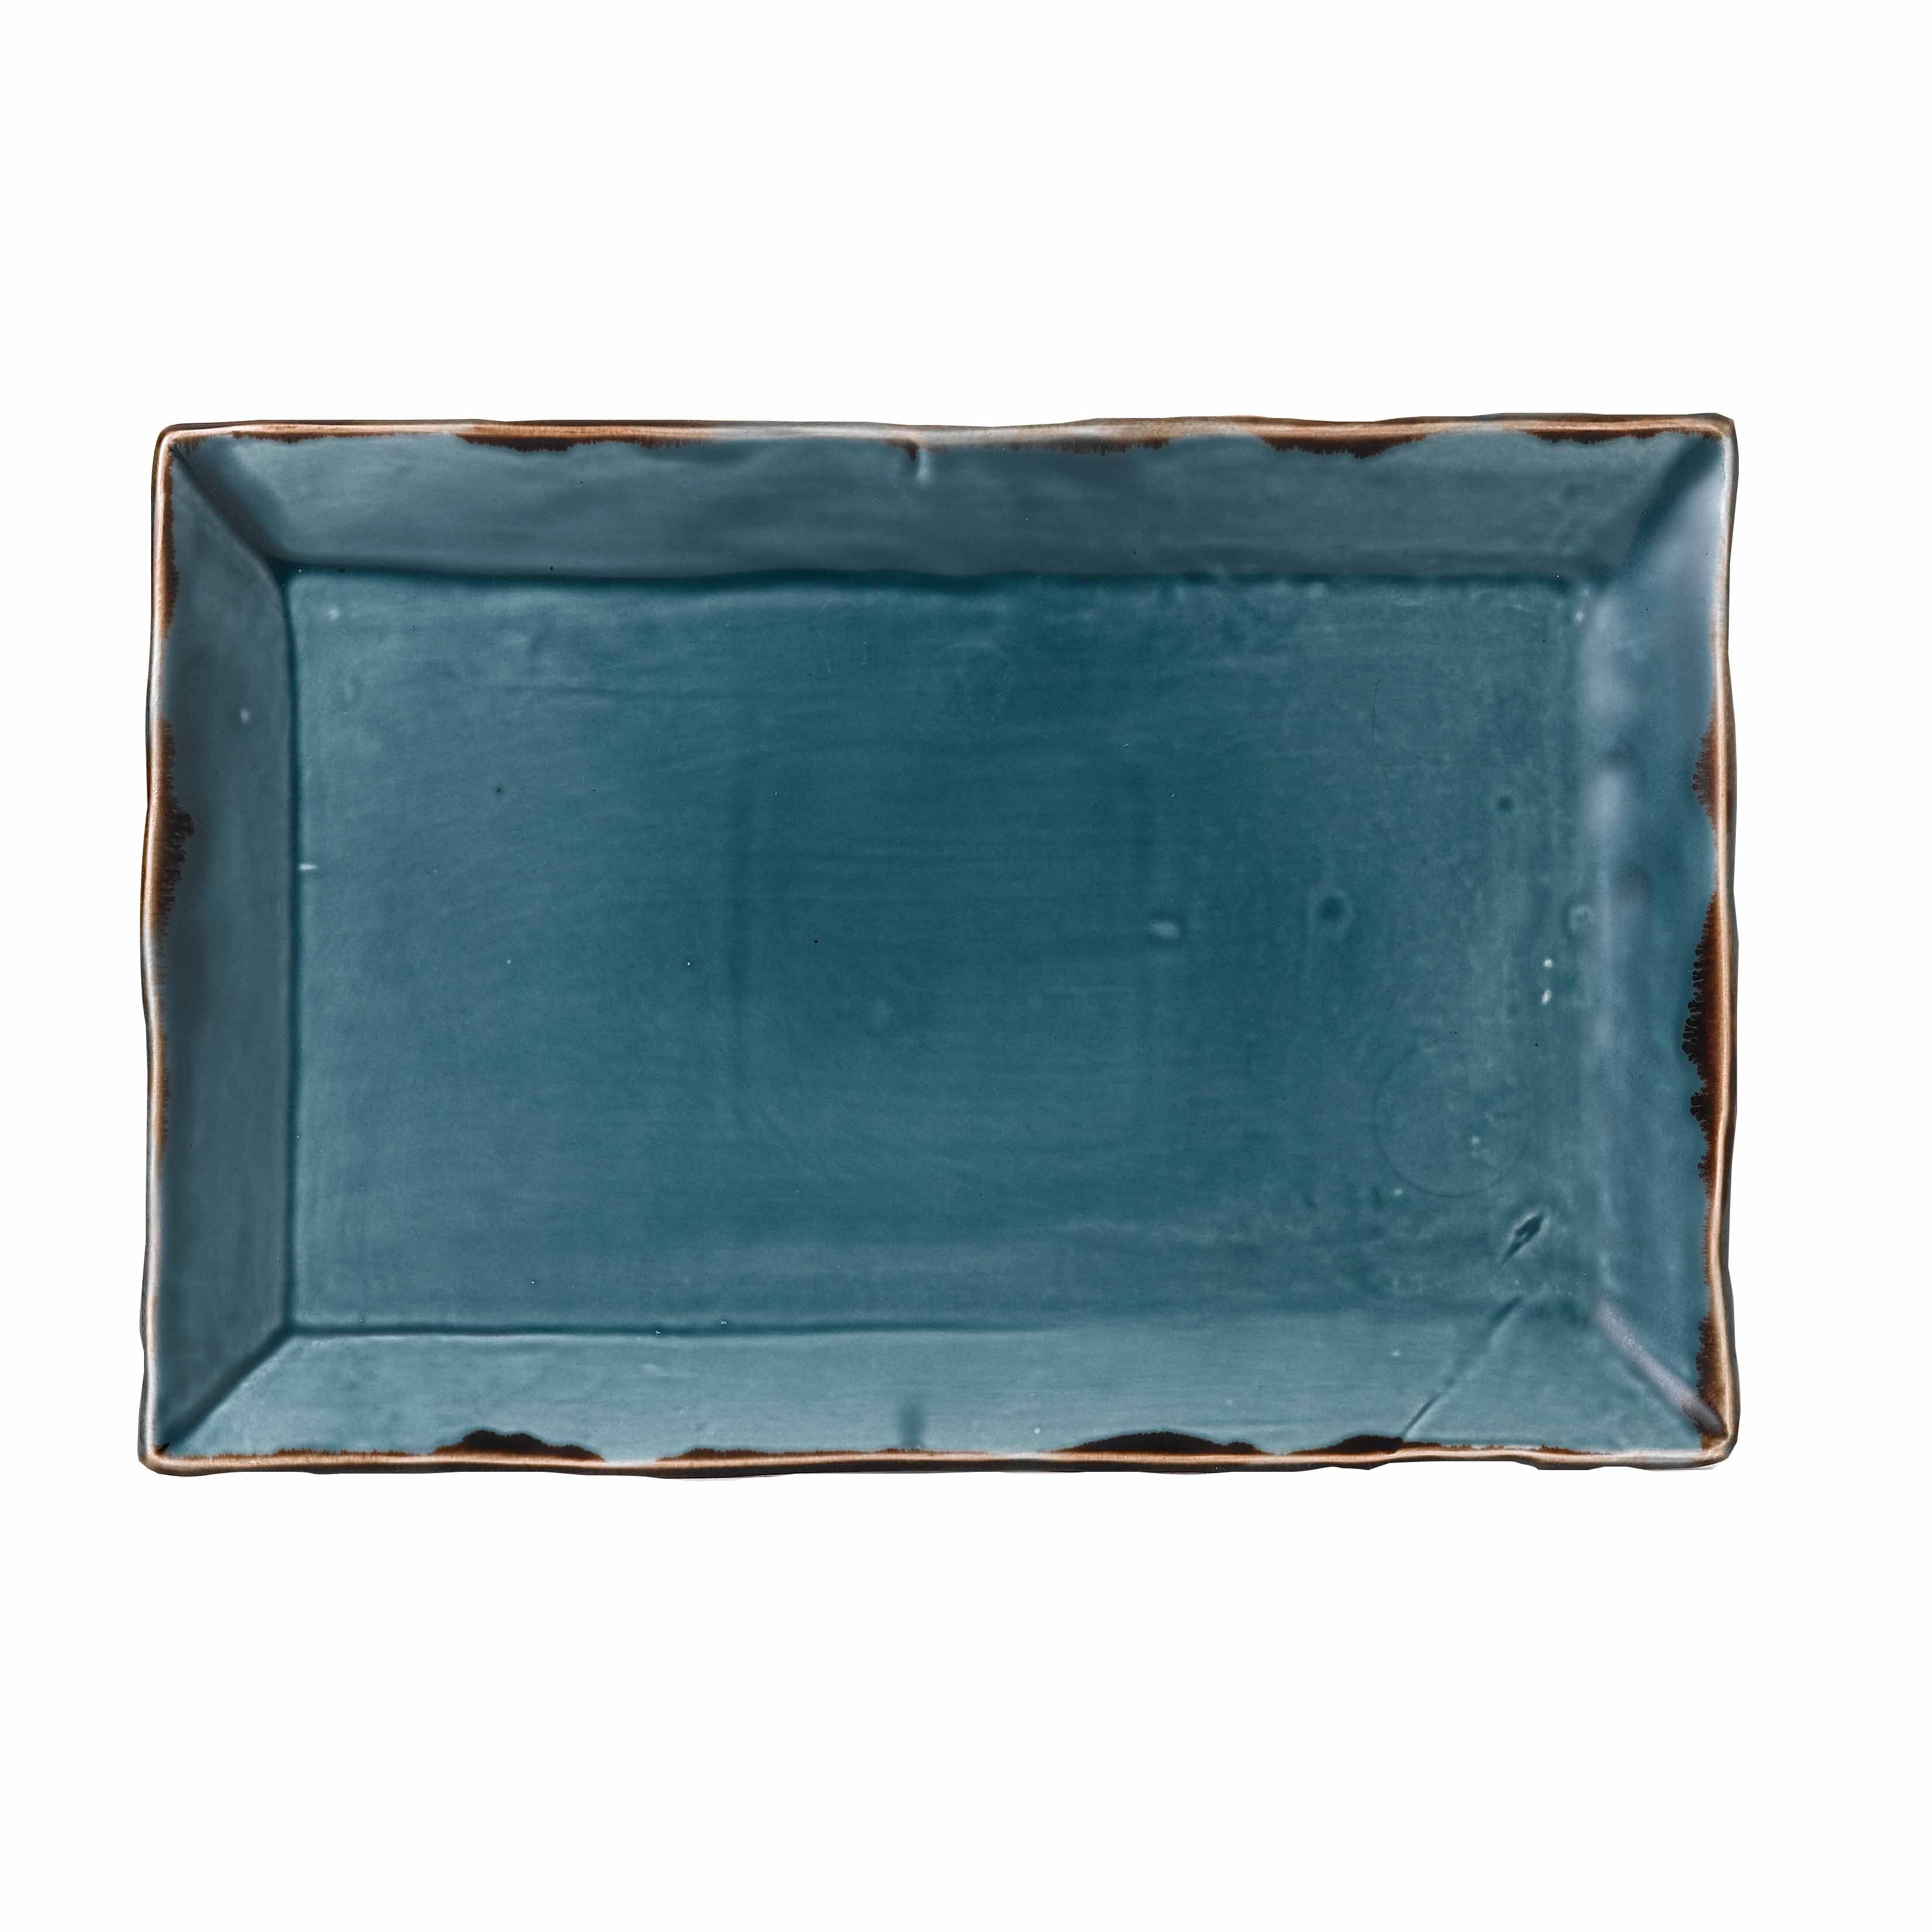 Dudson Tablett Harvest Dudson Rechteckig Blau Porzellan 6 Servierbrett Stück, Feinstes 34.5x23.3cm